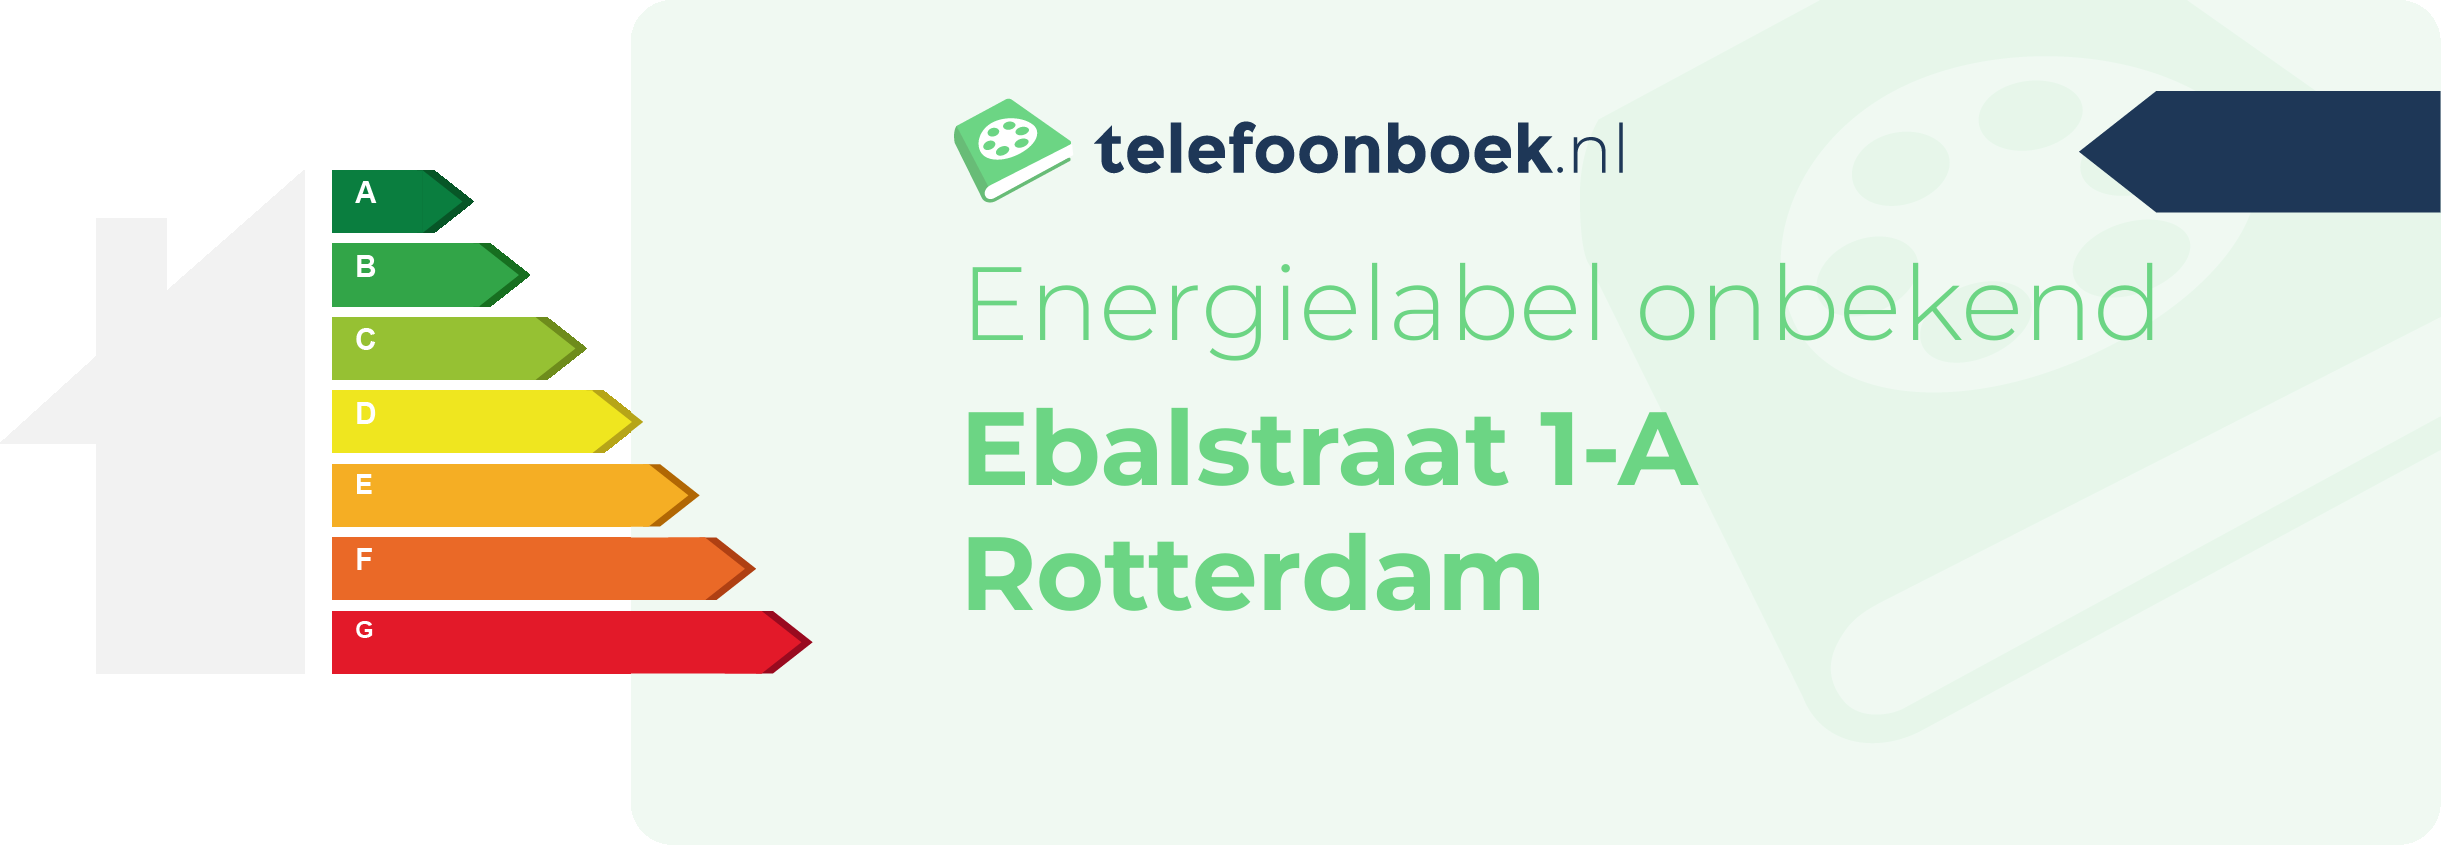 Energielabel Ebalstraat 1-A Rotterdam